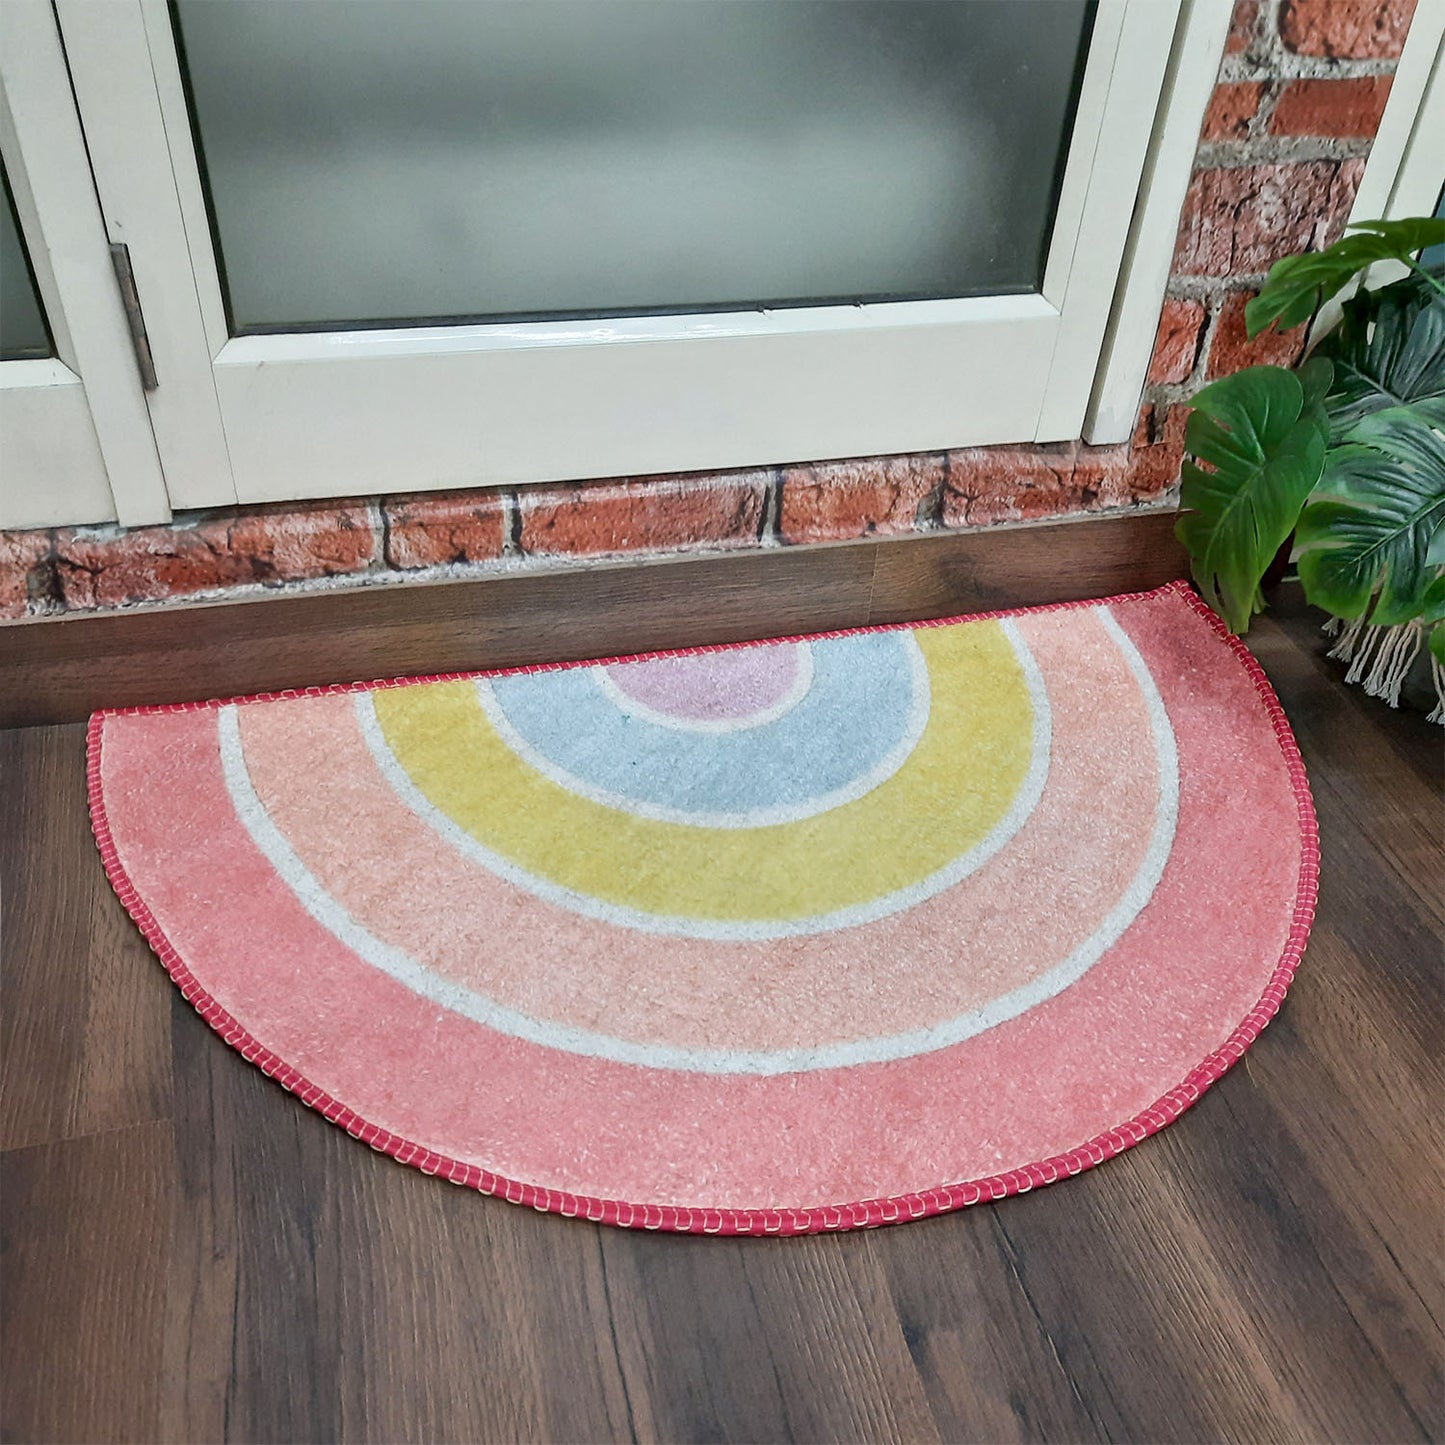 Avioni Home Floor Mats in Beautiful Rainbow Design | Anti Slip, Durable & Washable | Outdoor & Indoor